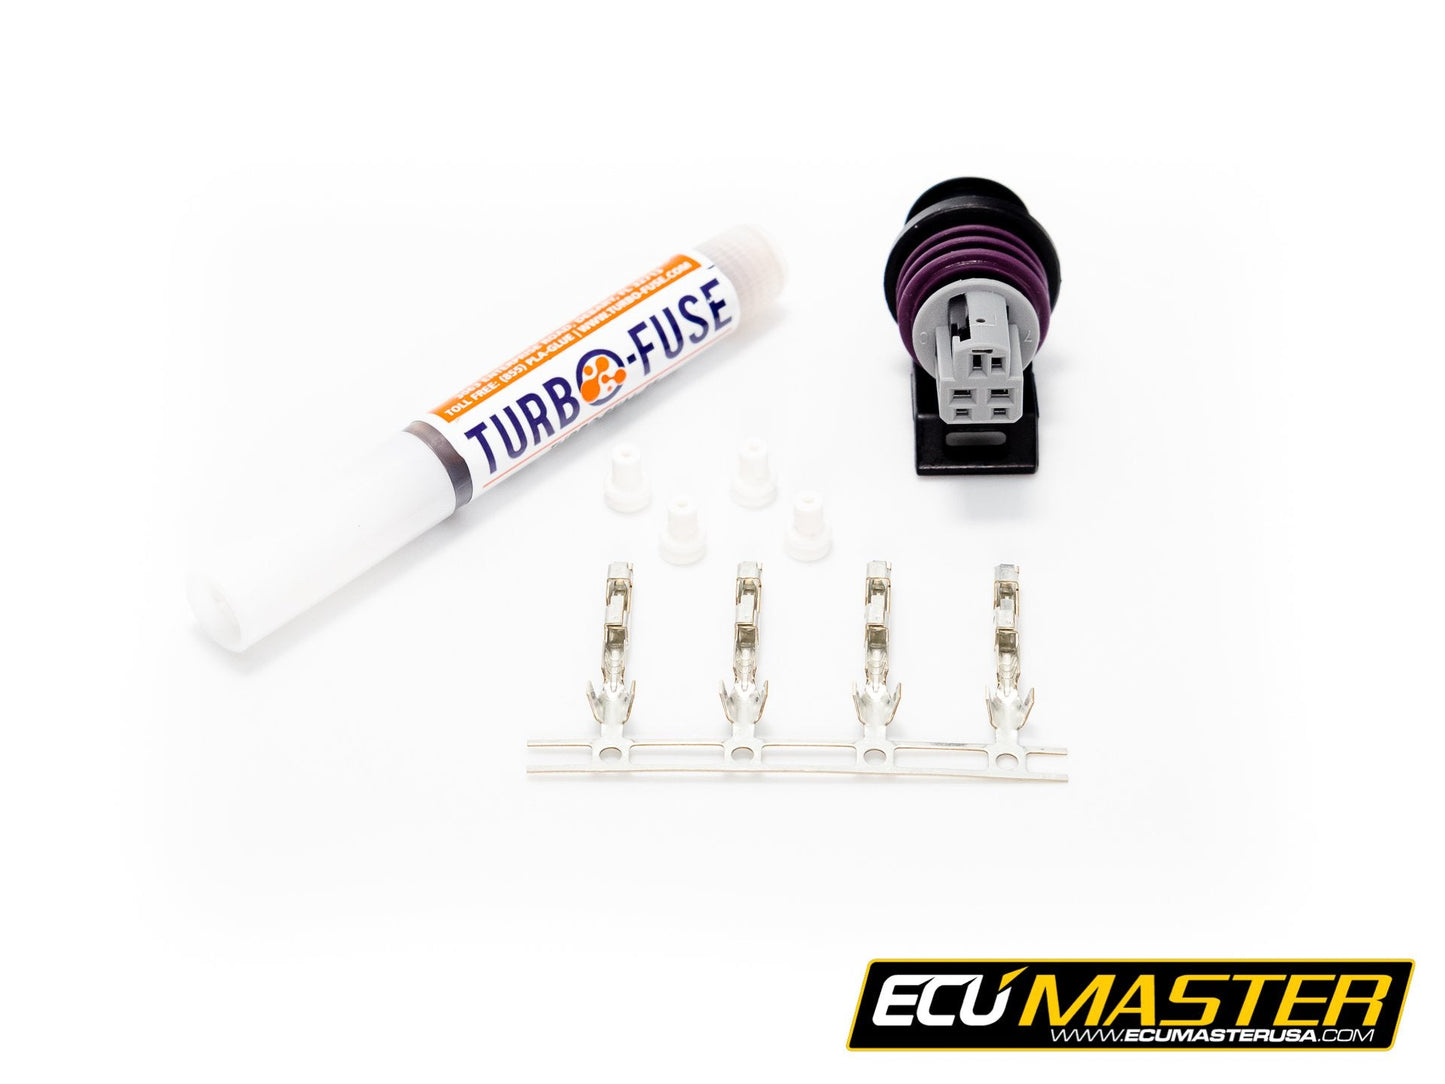 ECUMaster Fluid Temperature Sensor (oil, water, etc.), 1/8 NPT – ECUMaster  USA